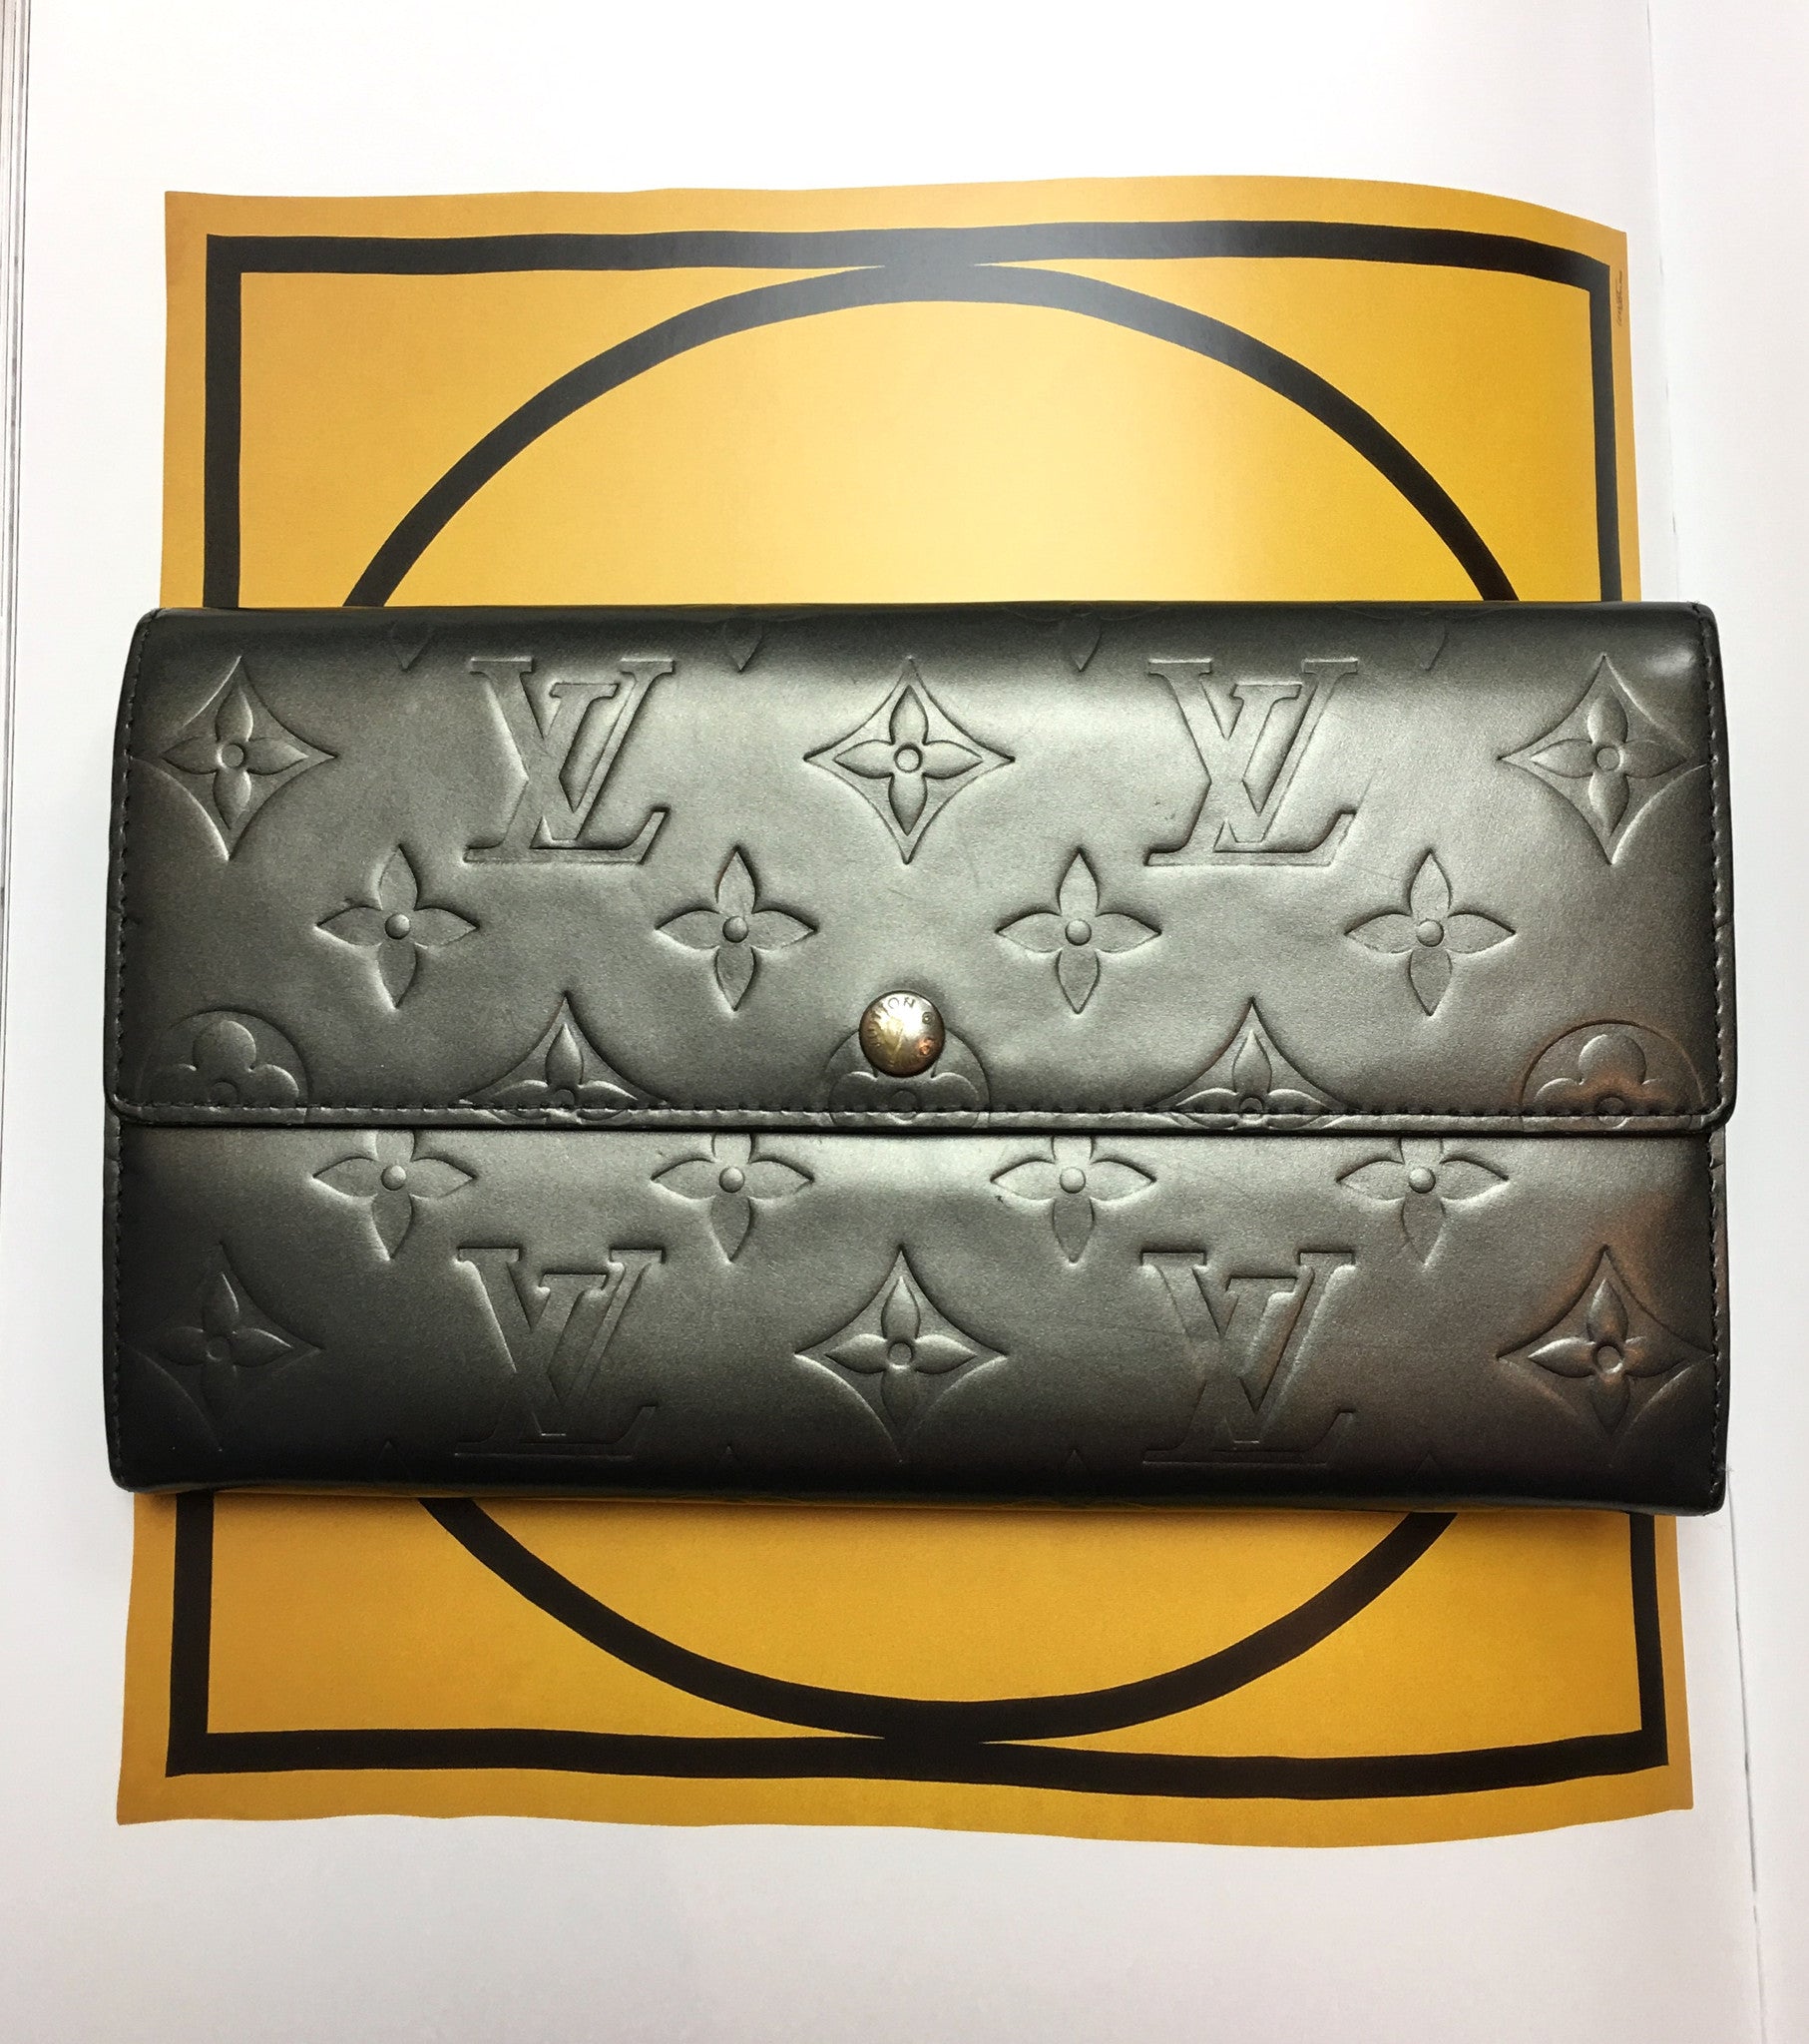 Authentic Louis Vuitton Gray Monogram Matt Vernis Wallet Excellent Used